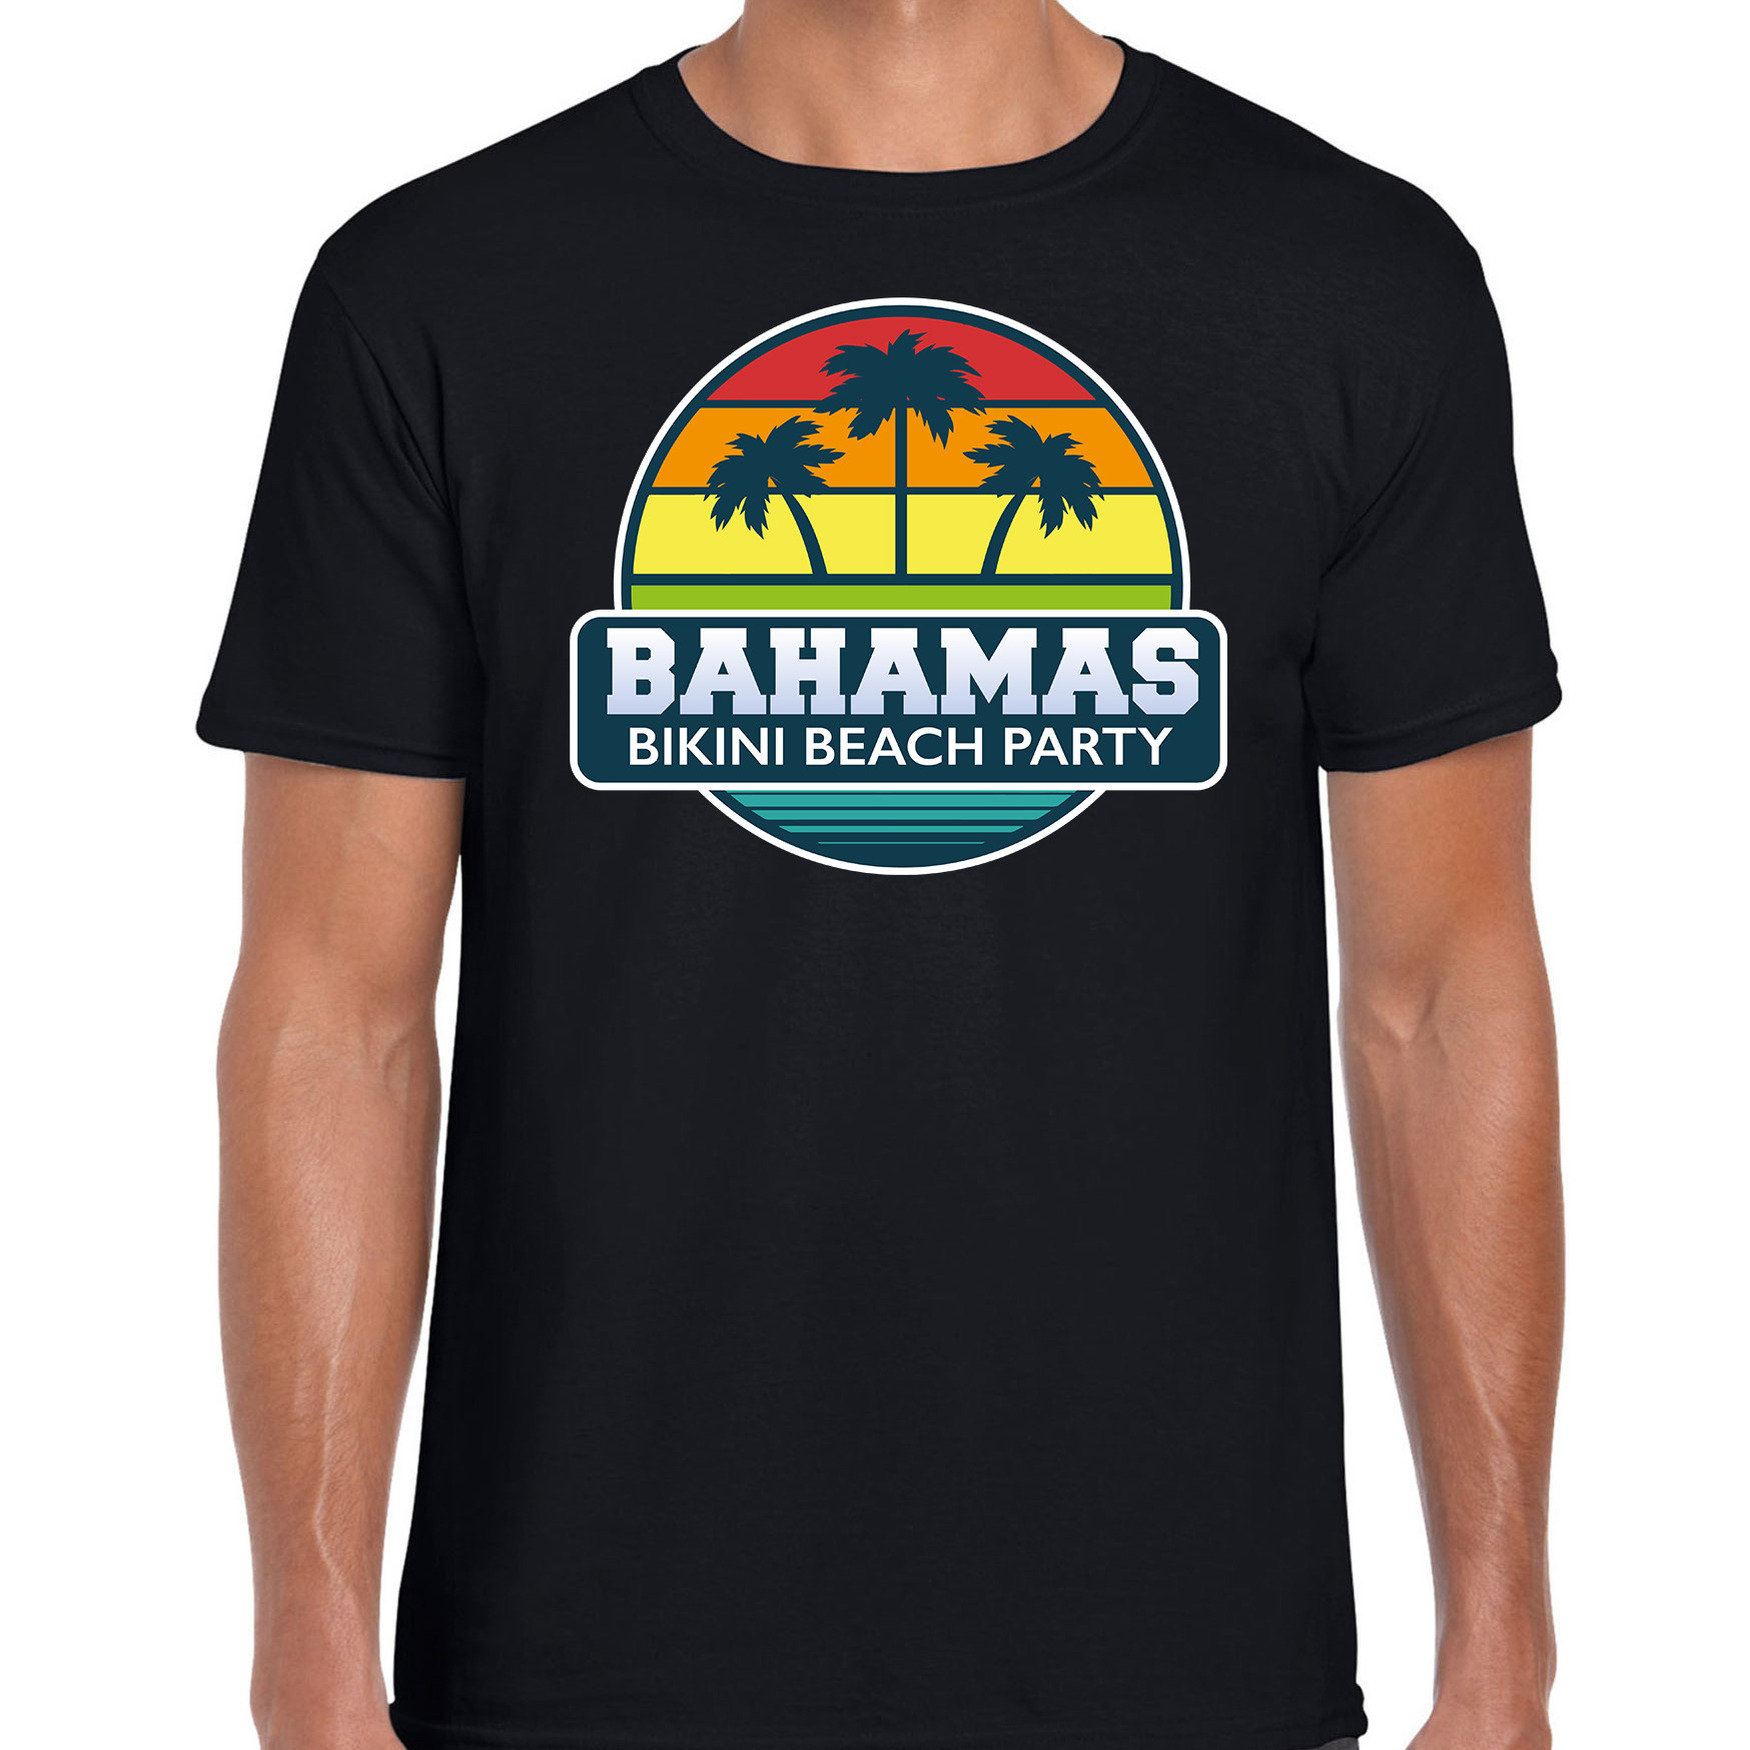 Bahamas bikini beach party shirt beach-strandfeest vakantie outfit-kleding zwart voor heren